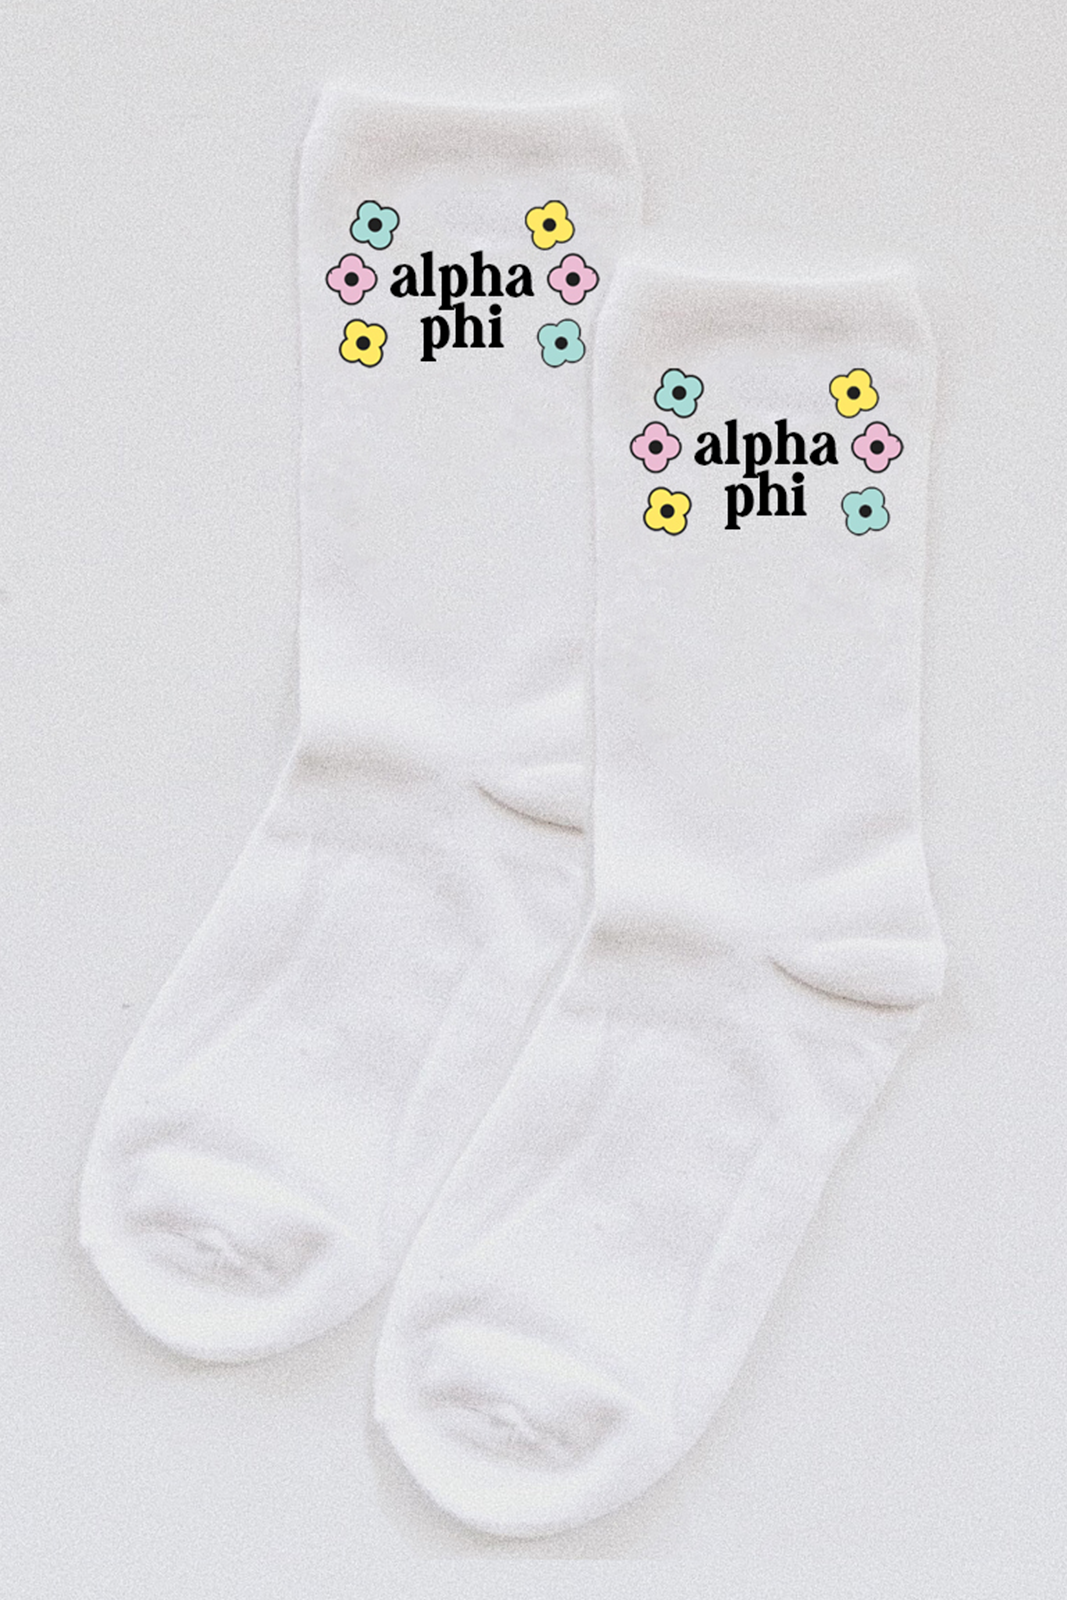 Alpha Phi Flower socks - Spikes and Seams Greek